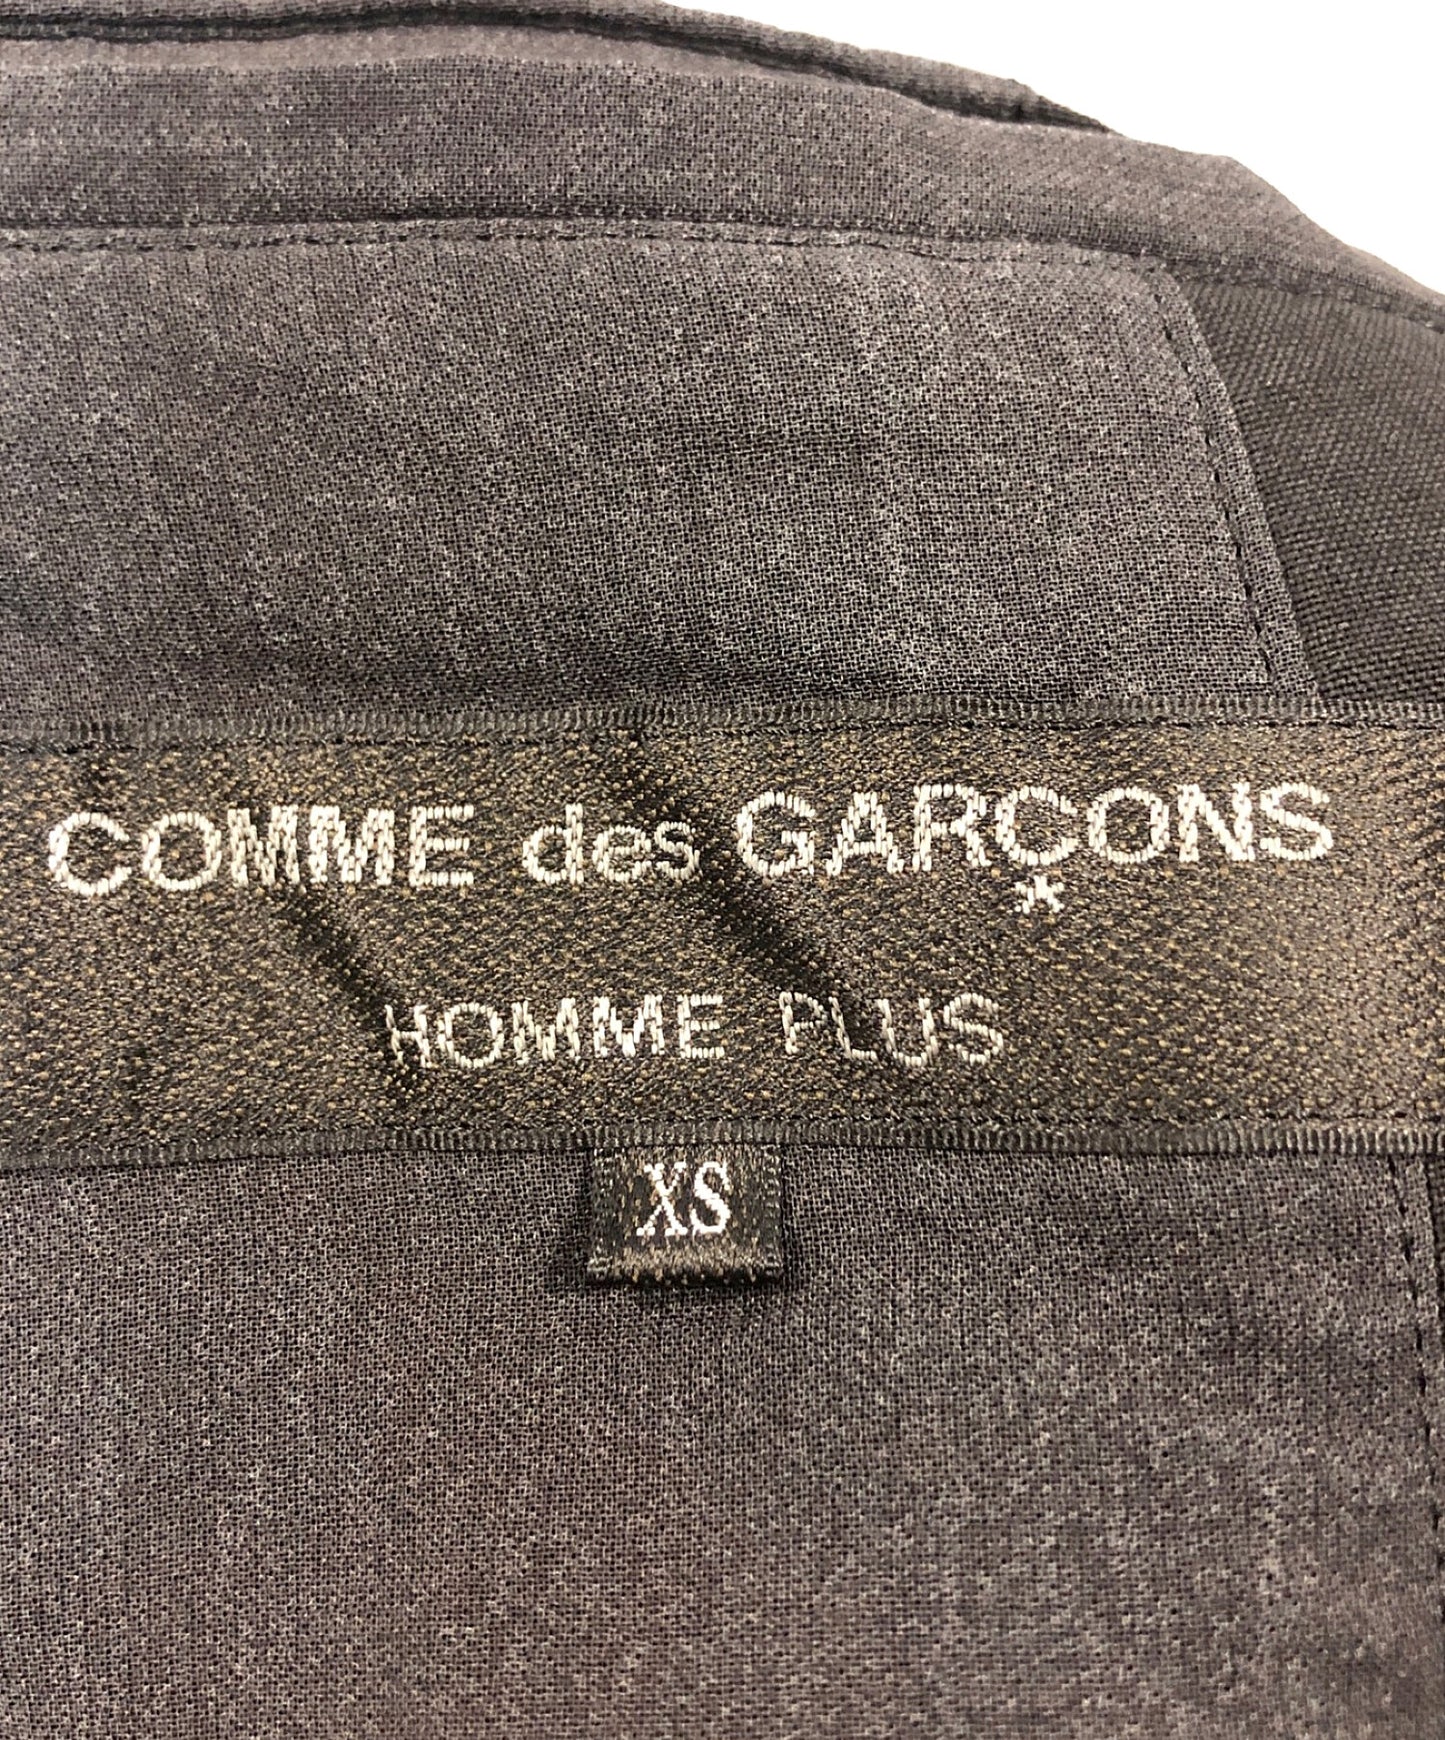 Comme des Garcons Homme + Sheer 도킹 맞춤형 재킷 PM-J026